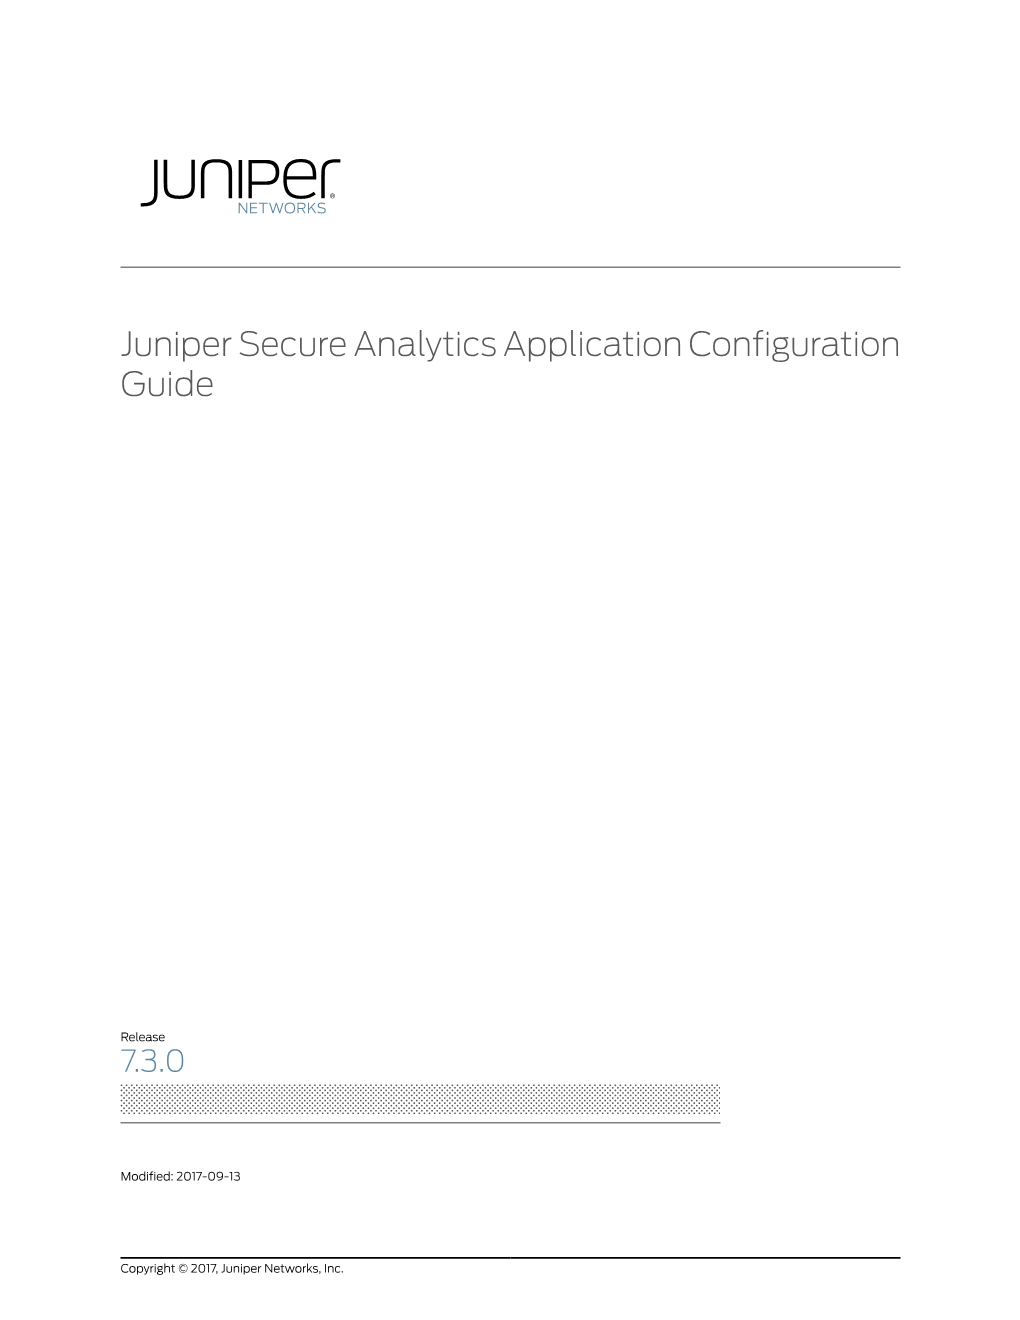 Juniper Secure Analytics Application Configuration Guide